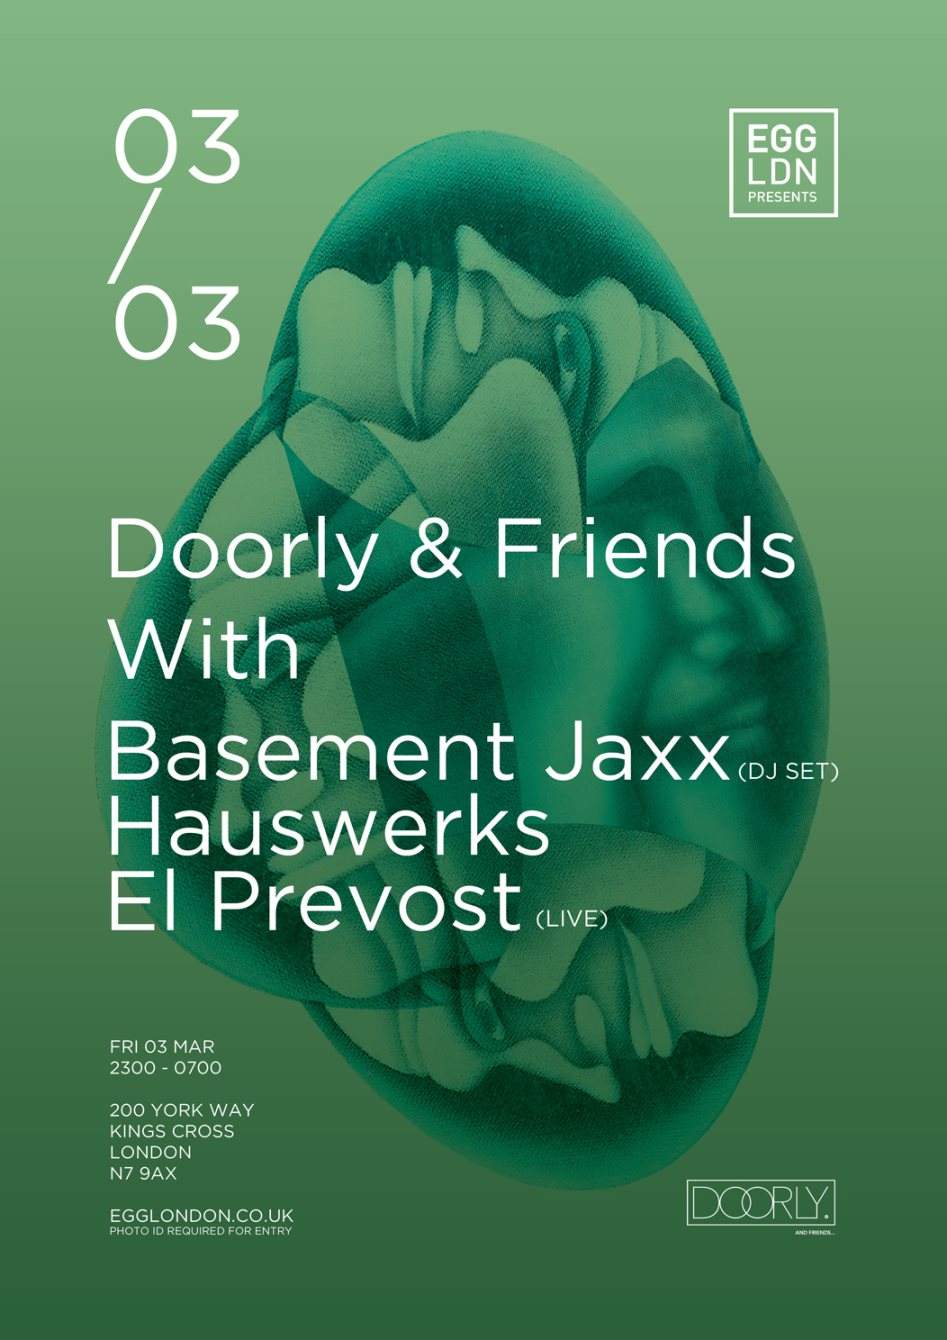 Egg presents: Doorly & Friends with Basement Jaxx (Dj Set), Hauswerks, El Prevost (Live) & More - フライヤー表